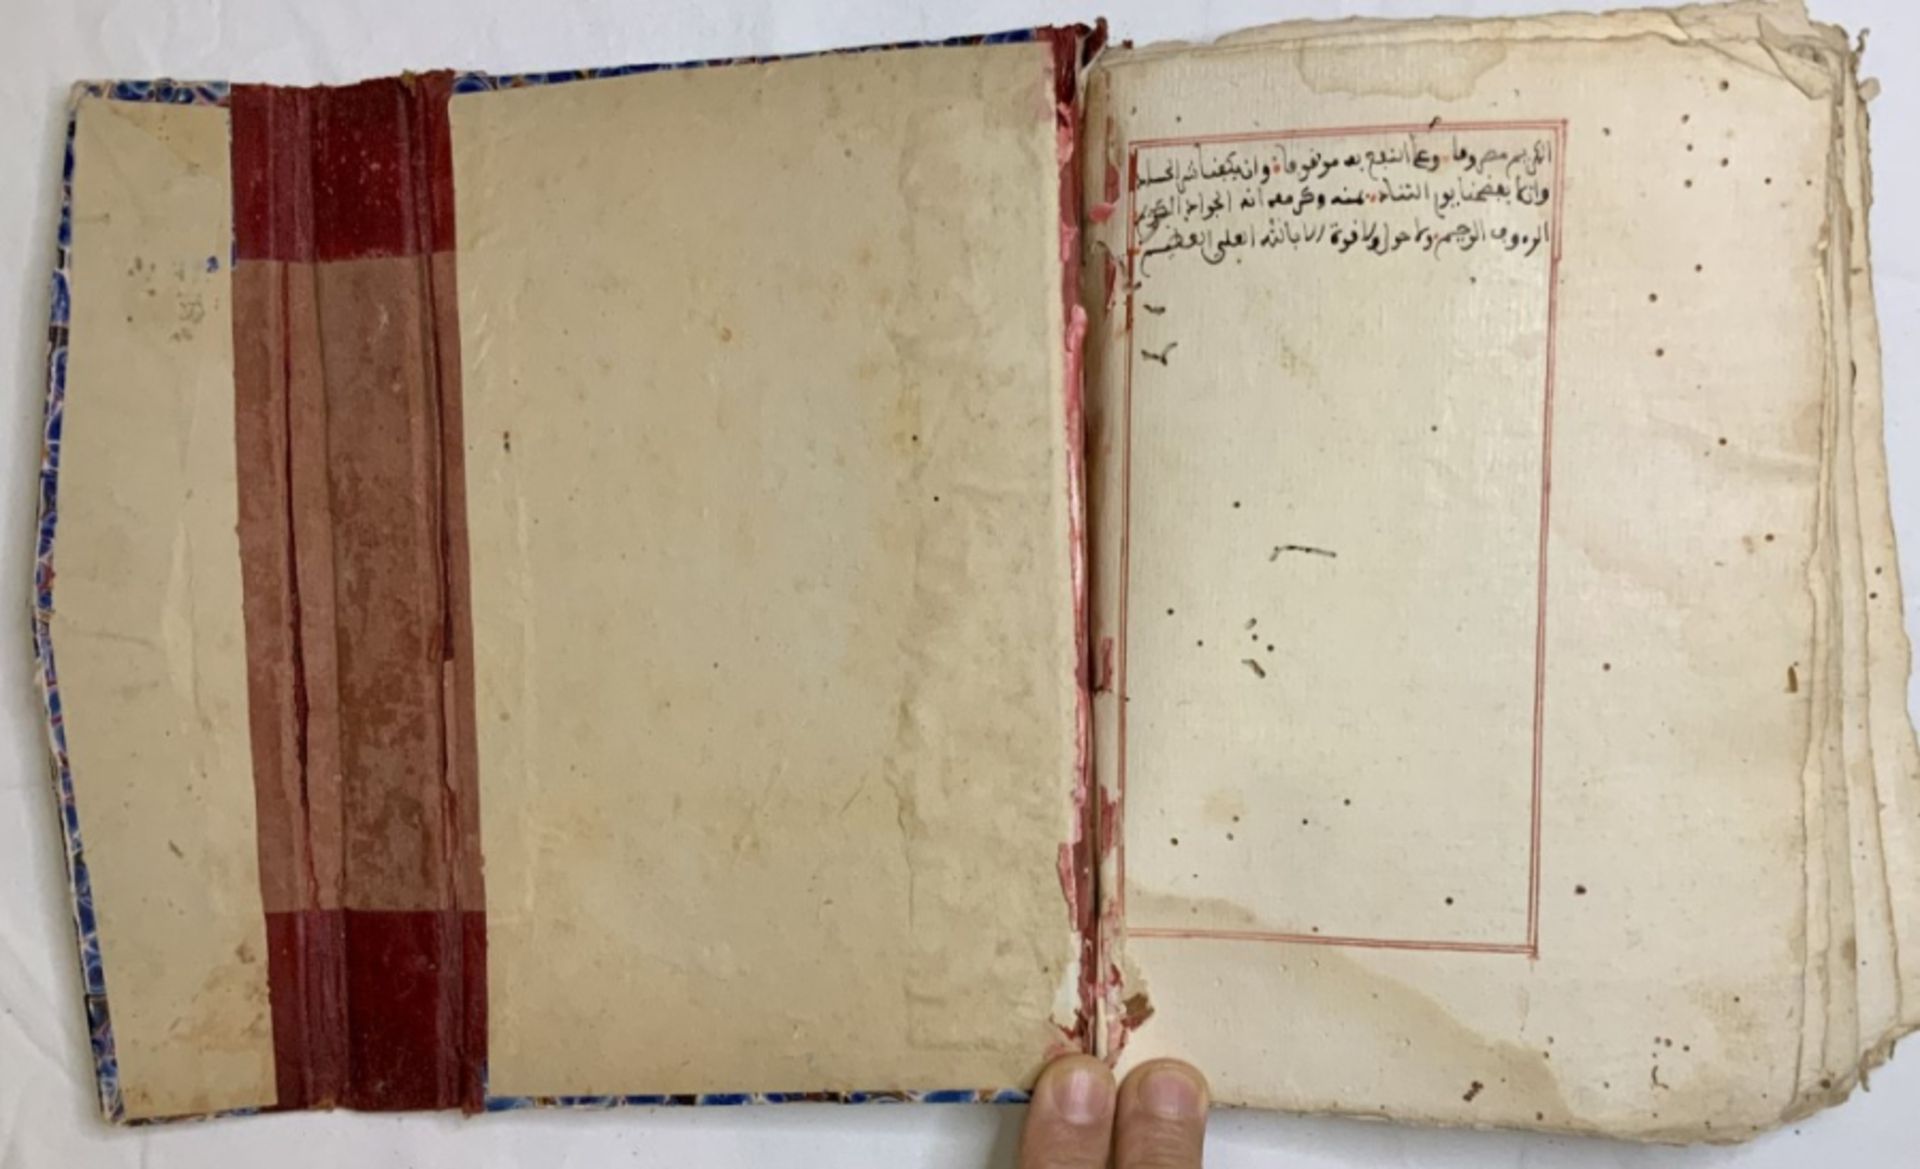 18th century Islamic manuscript on morphology and rhetoric - Image 14 of 18